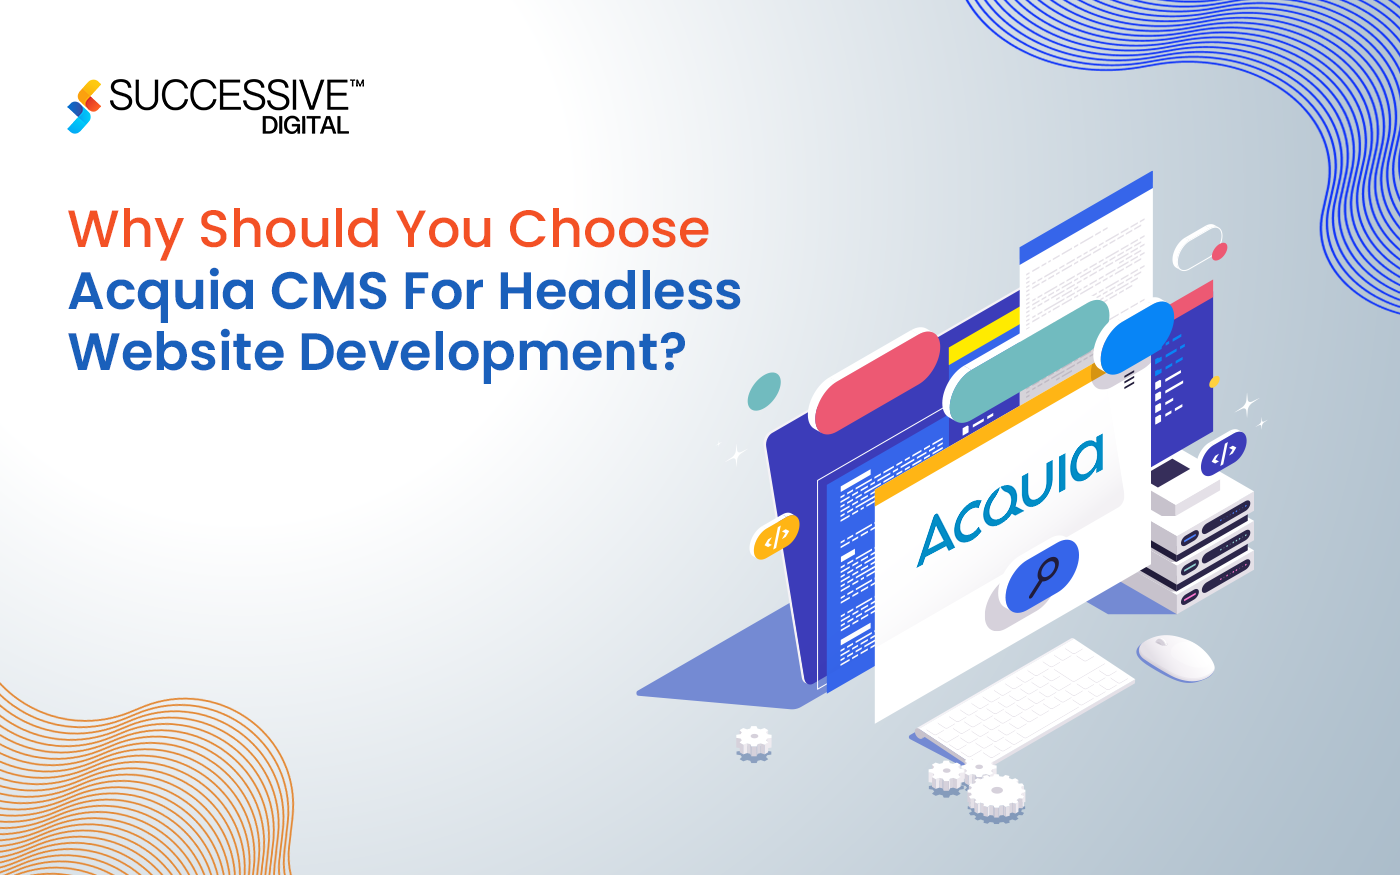 Why Should You Choose Acquia CMS For Headless Website Development?